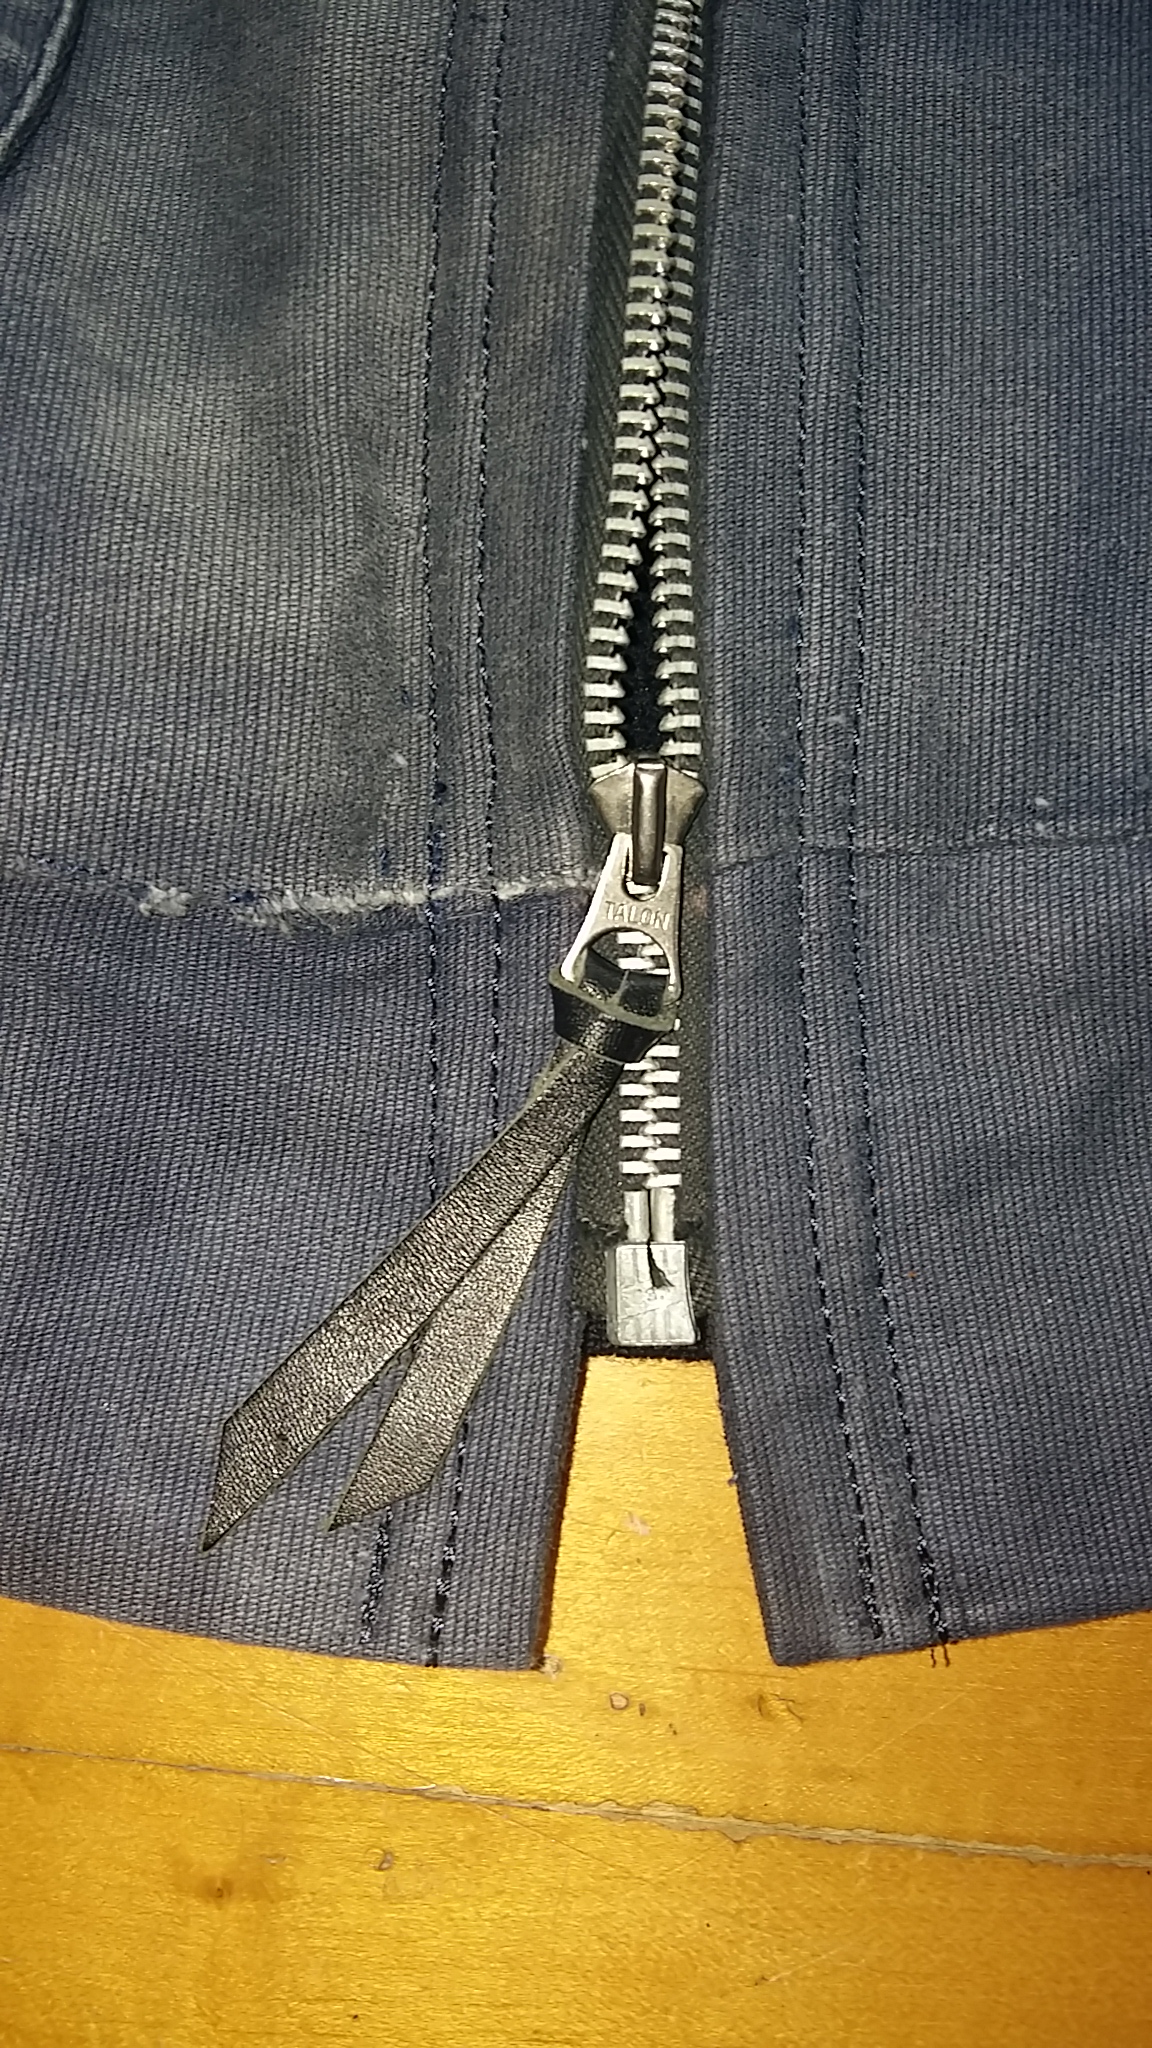 USN Deck Zip project [Bronson MOD] | Vintage Leather Jackets Forum